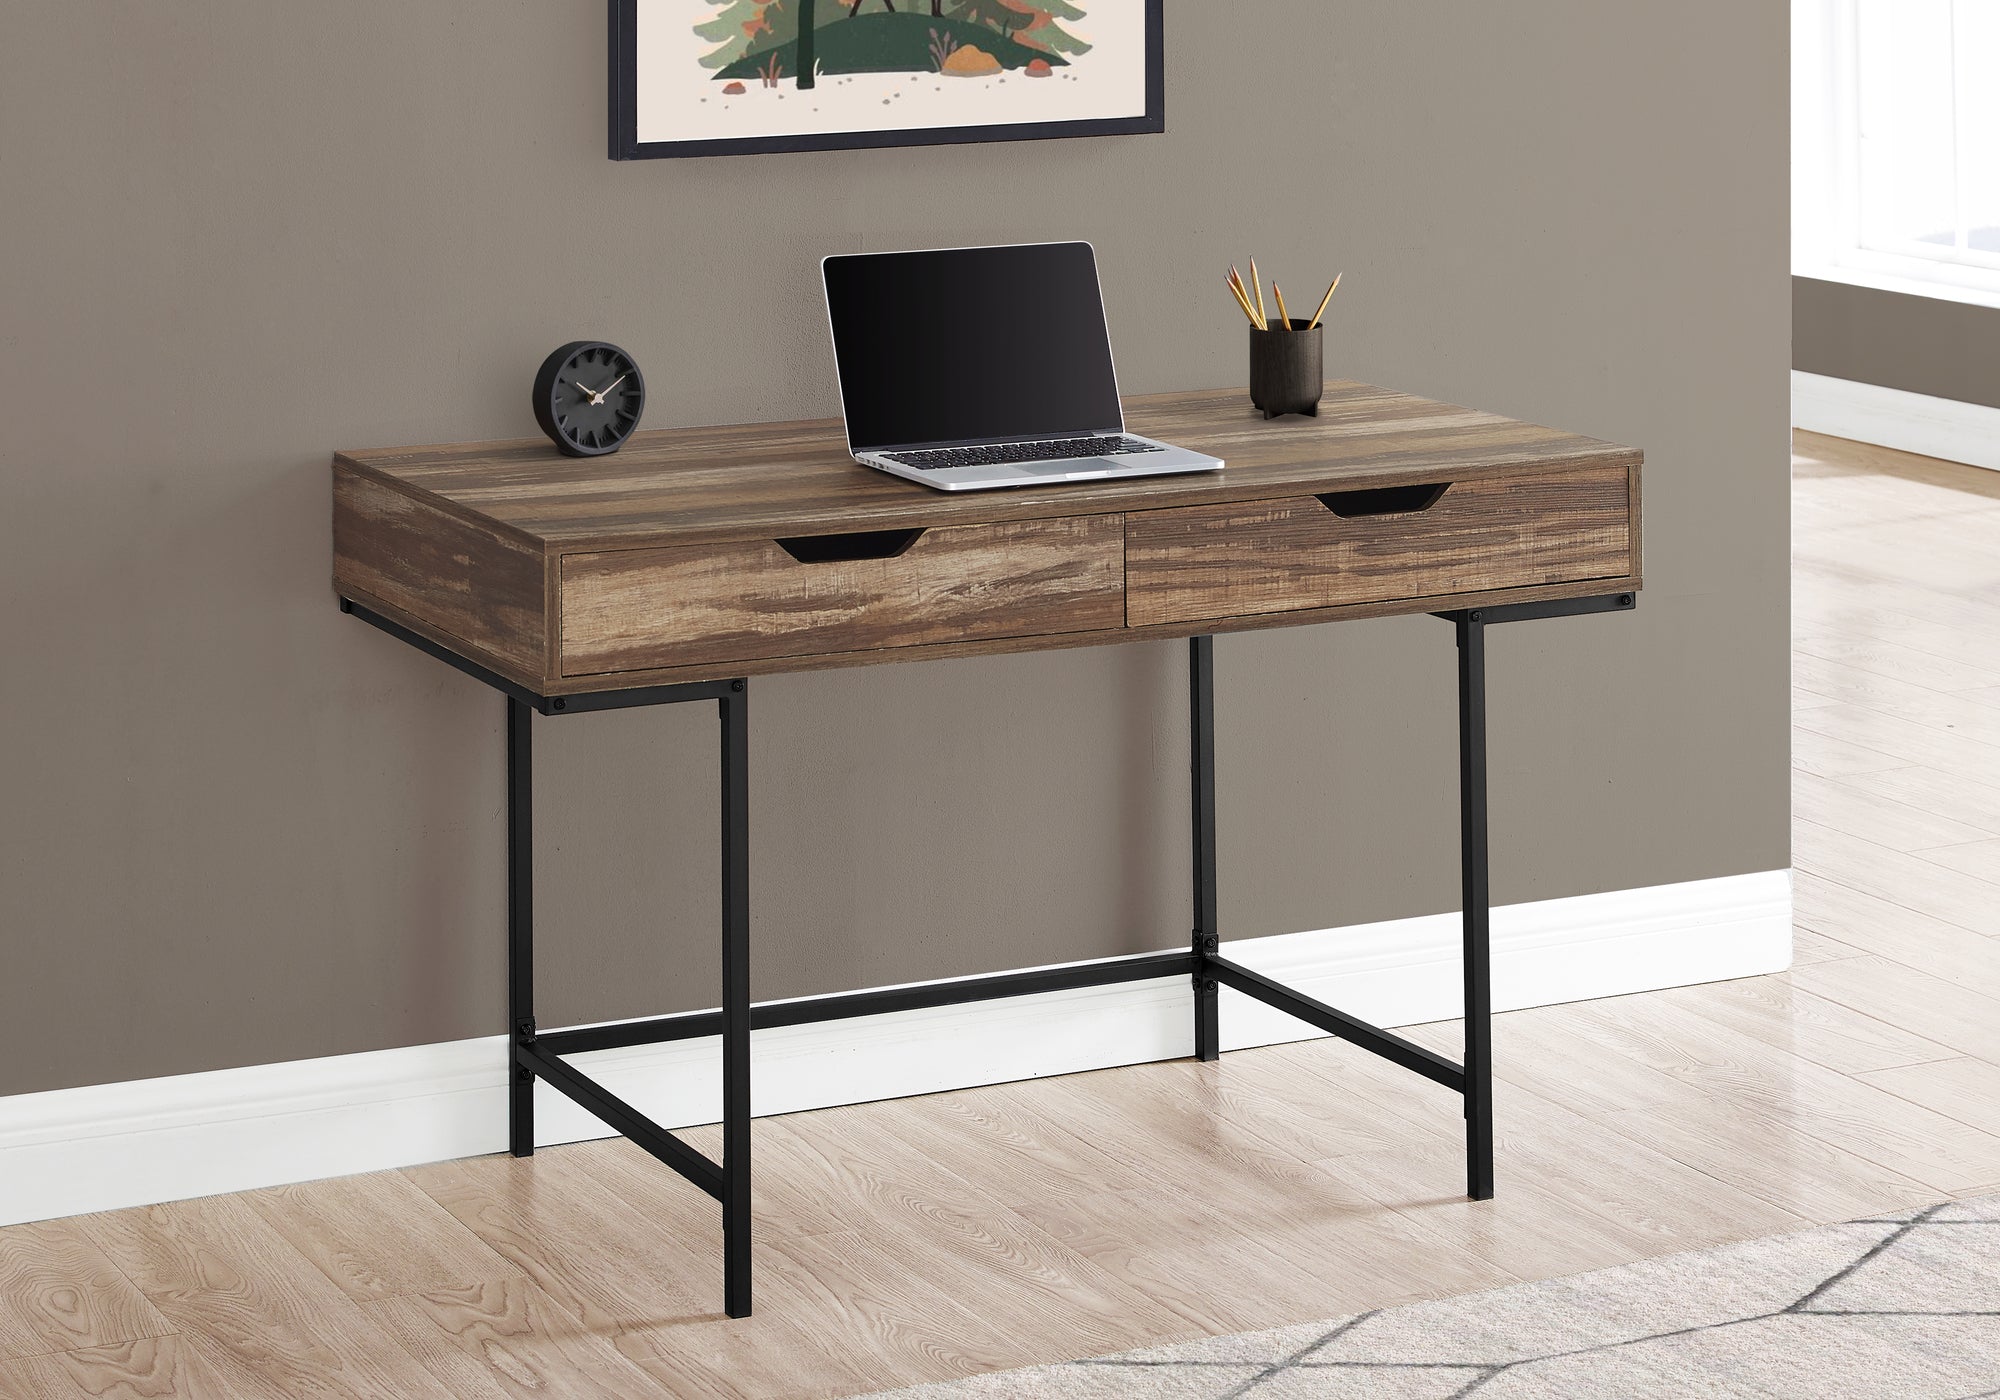 Monarch Natural Reclaimed Wood Look Reversible Computer Desk